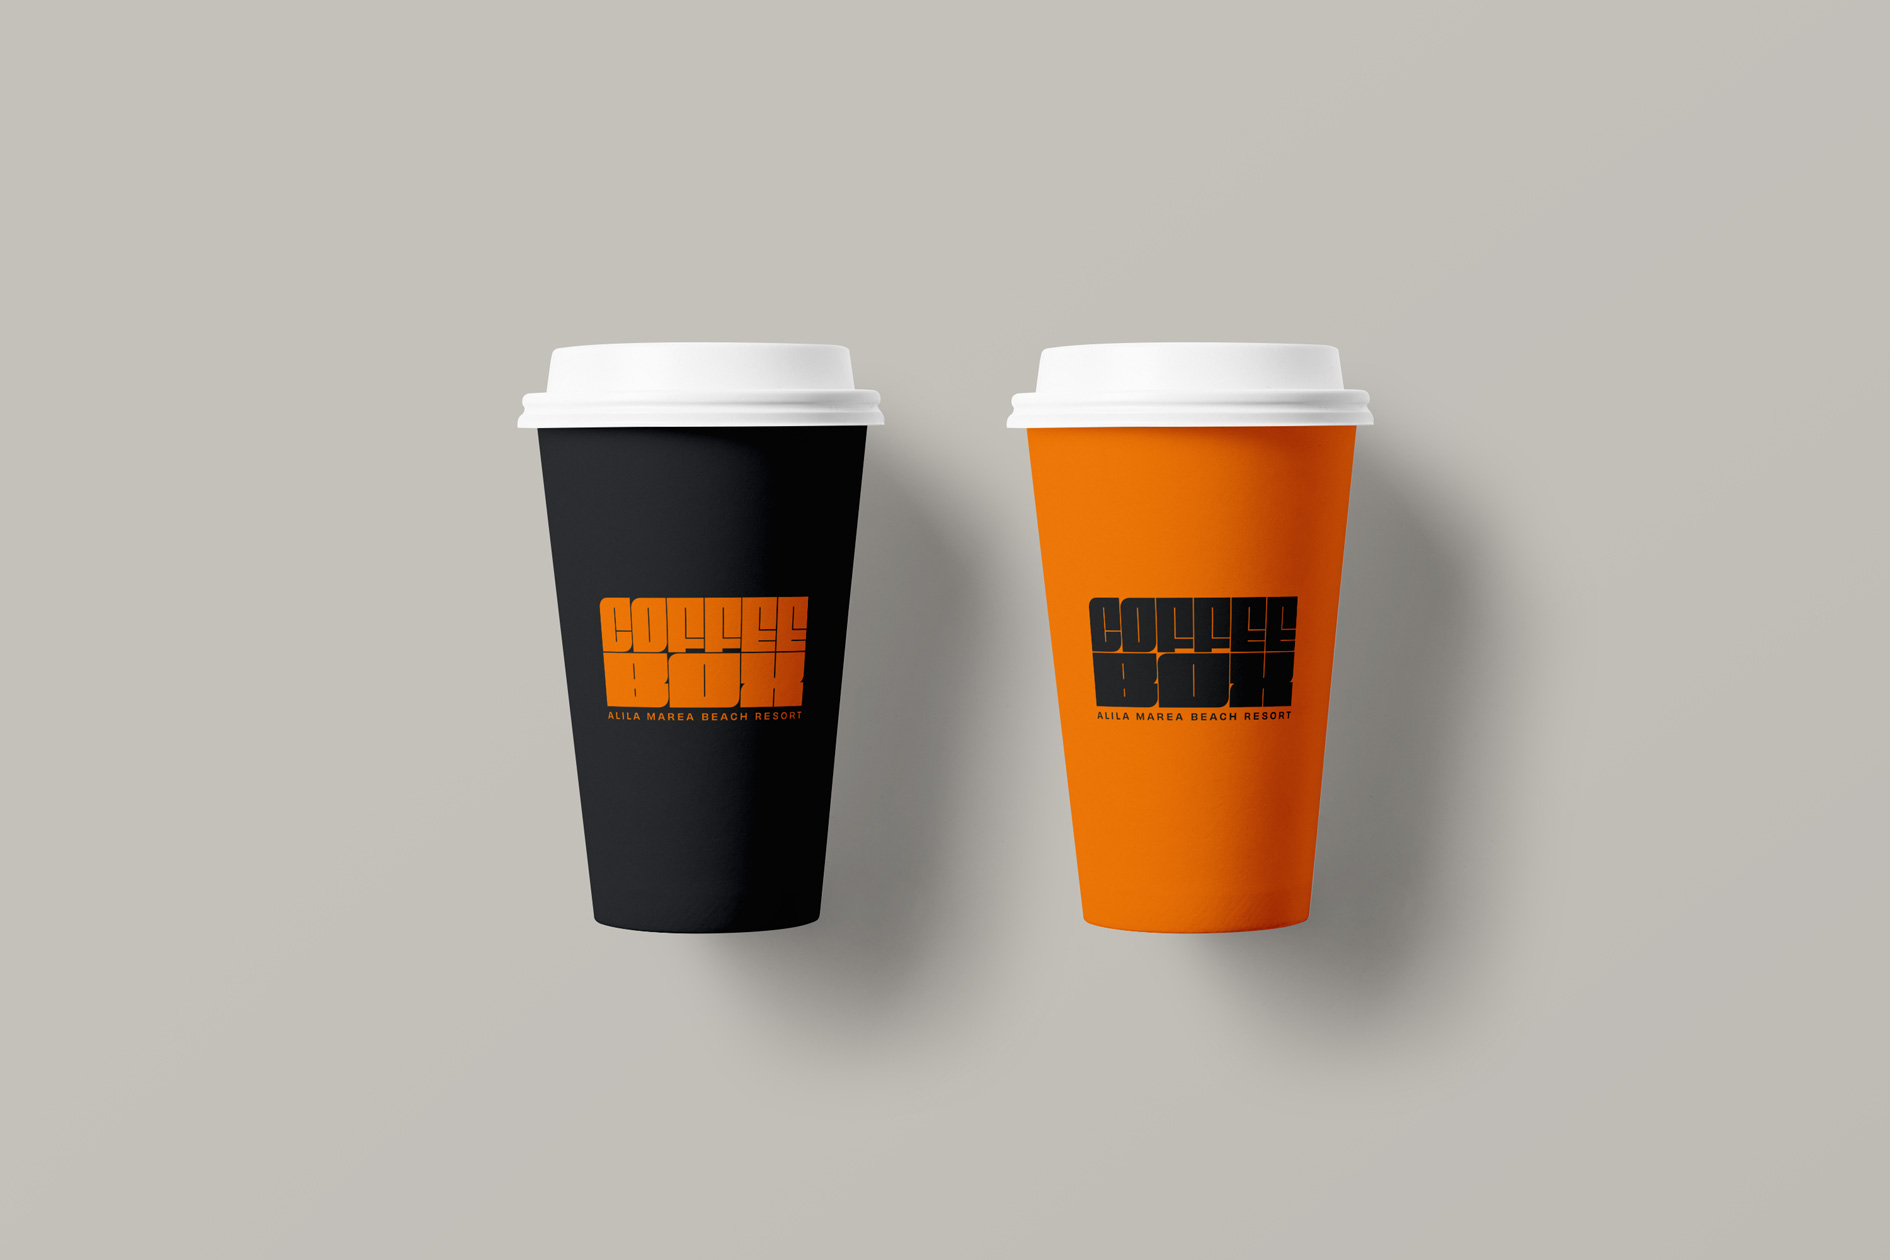 CoffeeBox Branding designed by Mark Zeff